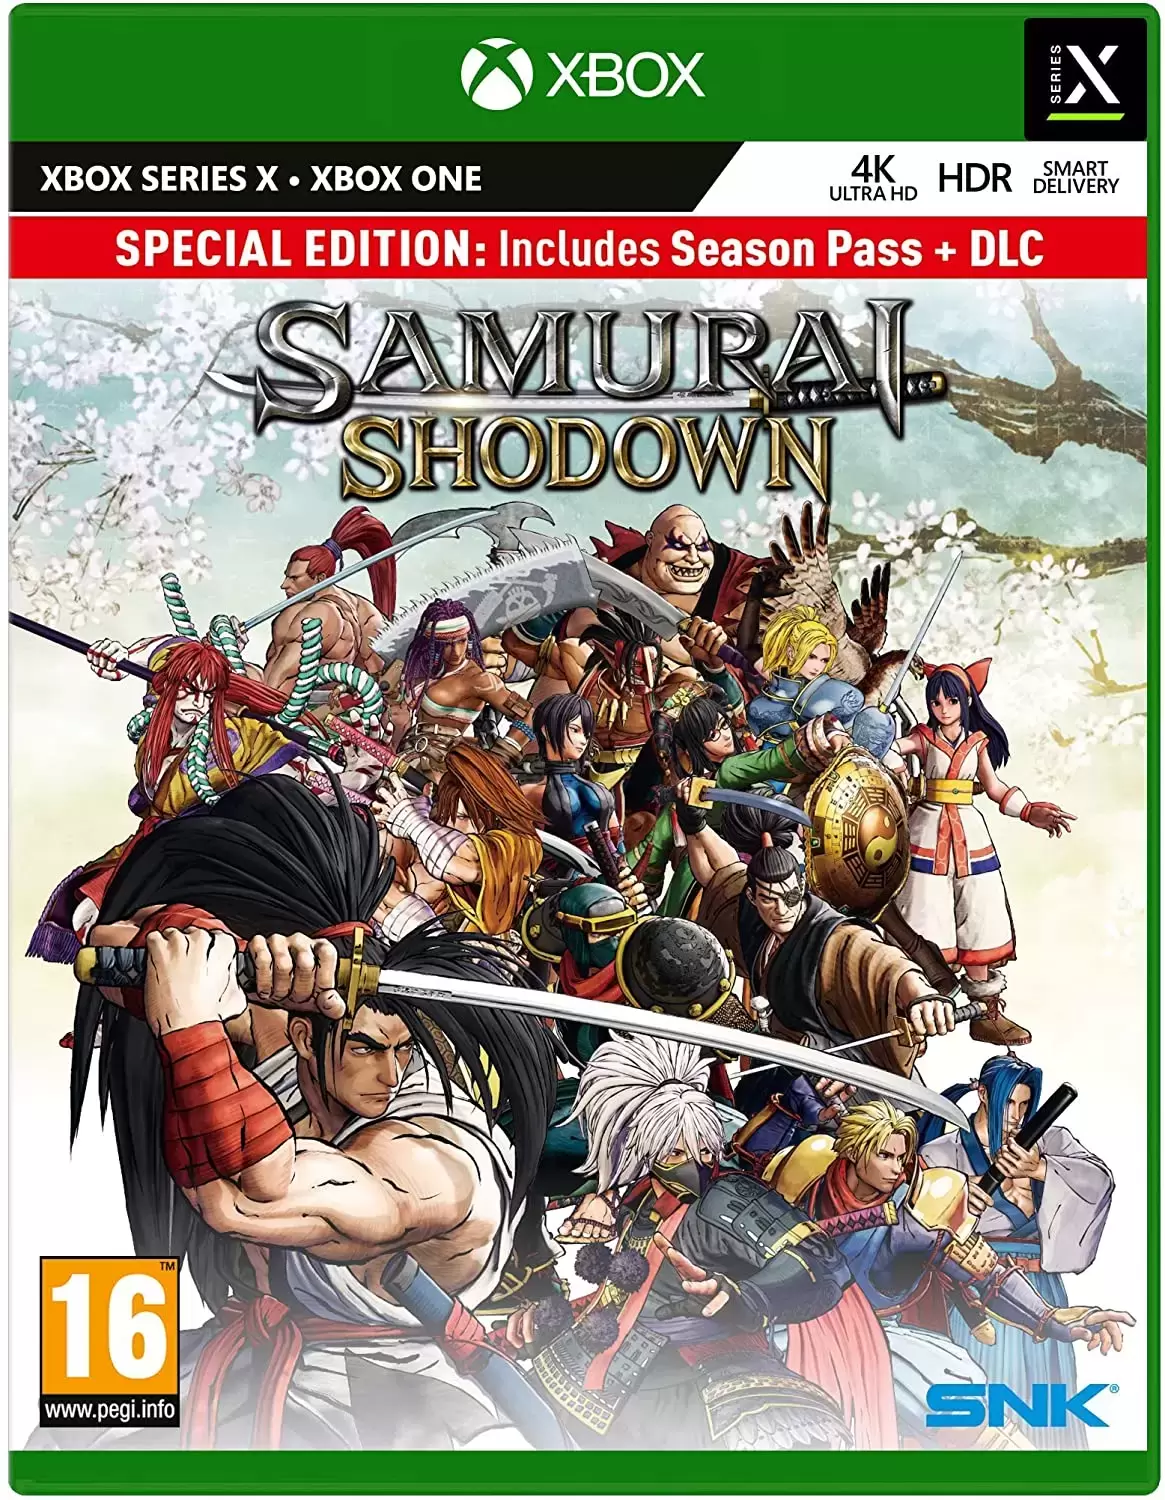 Jeux XBOX One - Samurai Shodown Special Edition